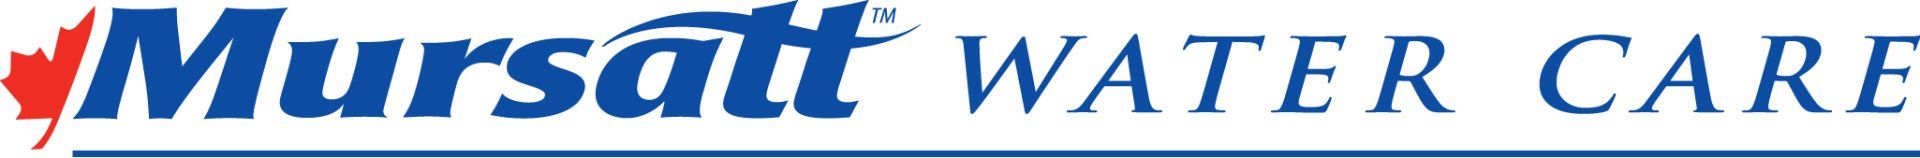 Mursatt Water Care logo